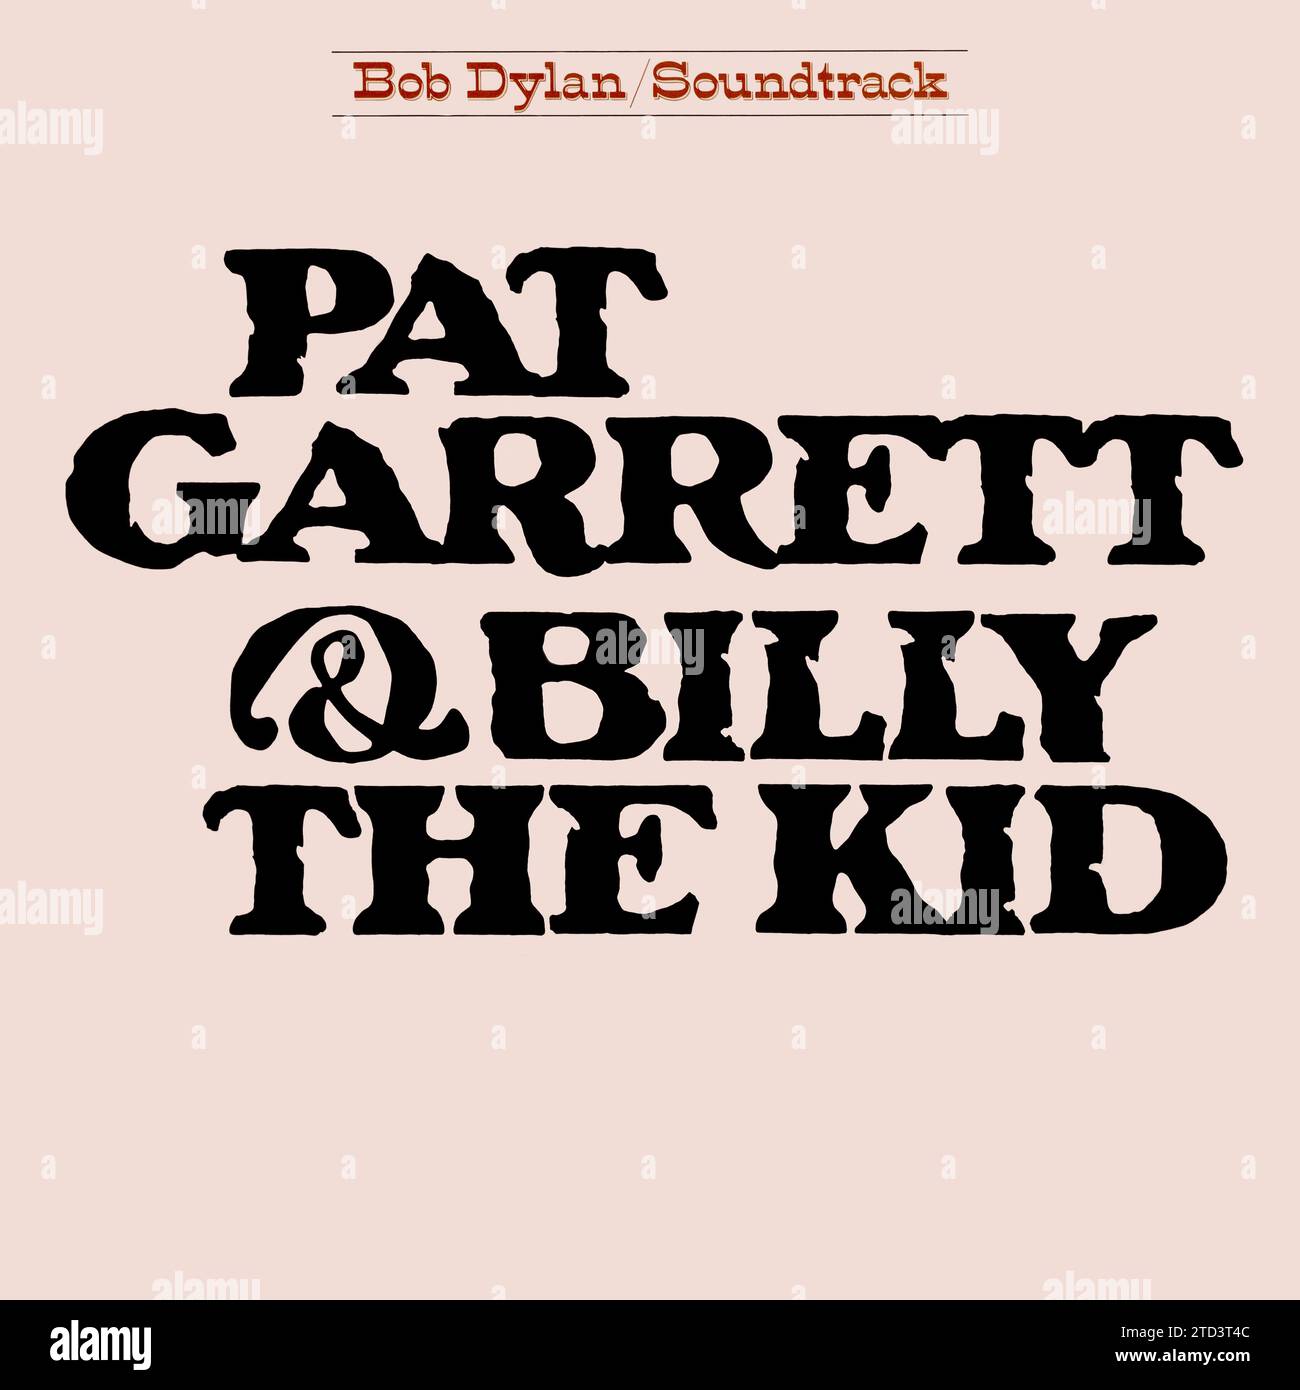 Bob Dylan - original vinyl album cover - Pat Garrett & Billy The Kid - 1973 Stock Photo